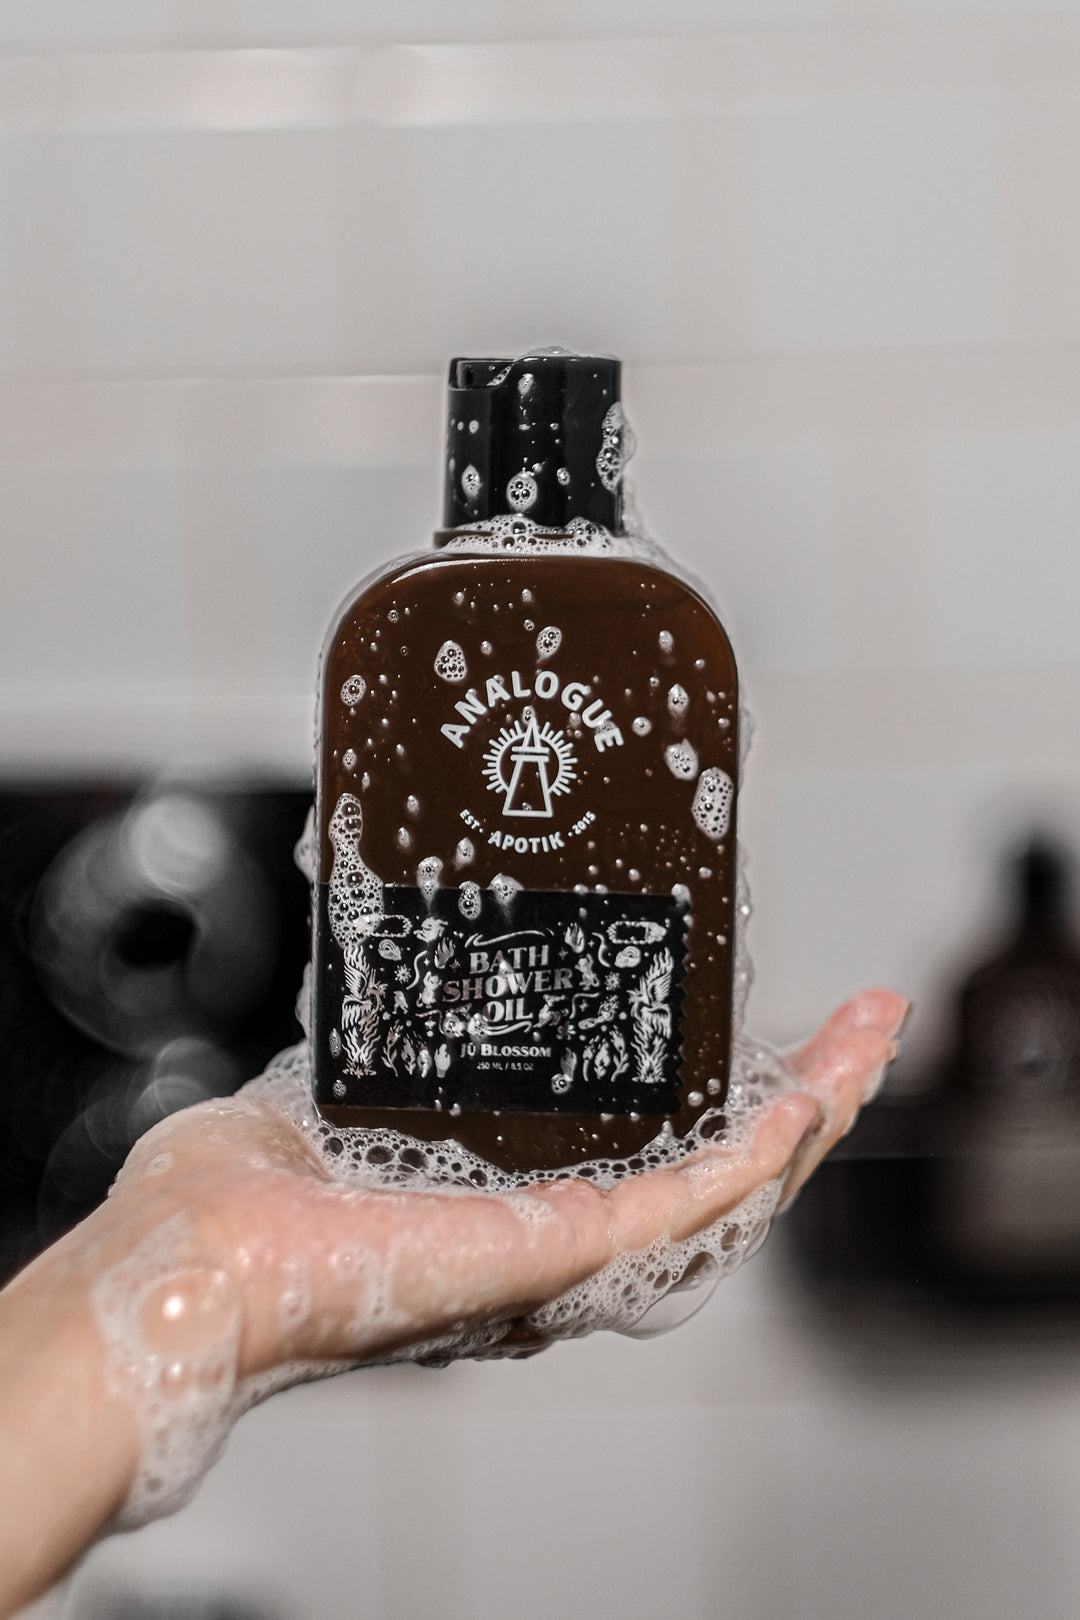 Analogue Shower Oil Body Wash - Jù Blossom